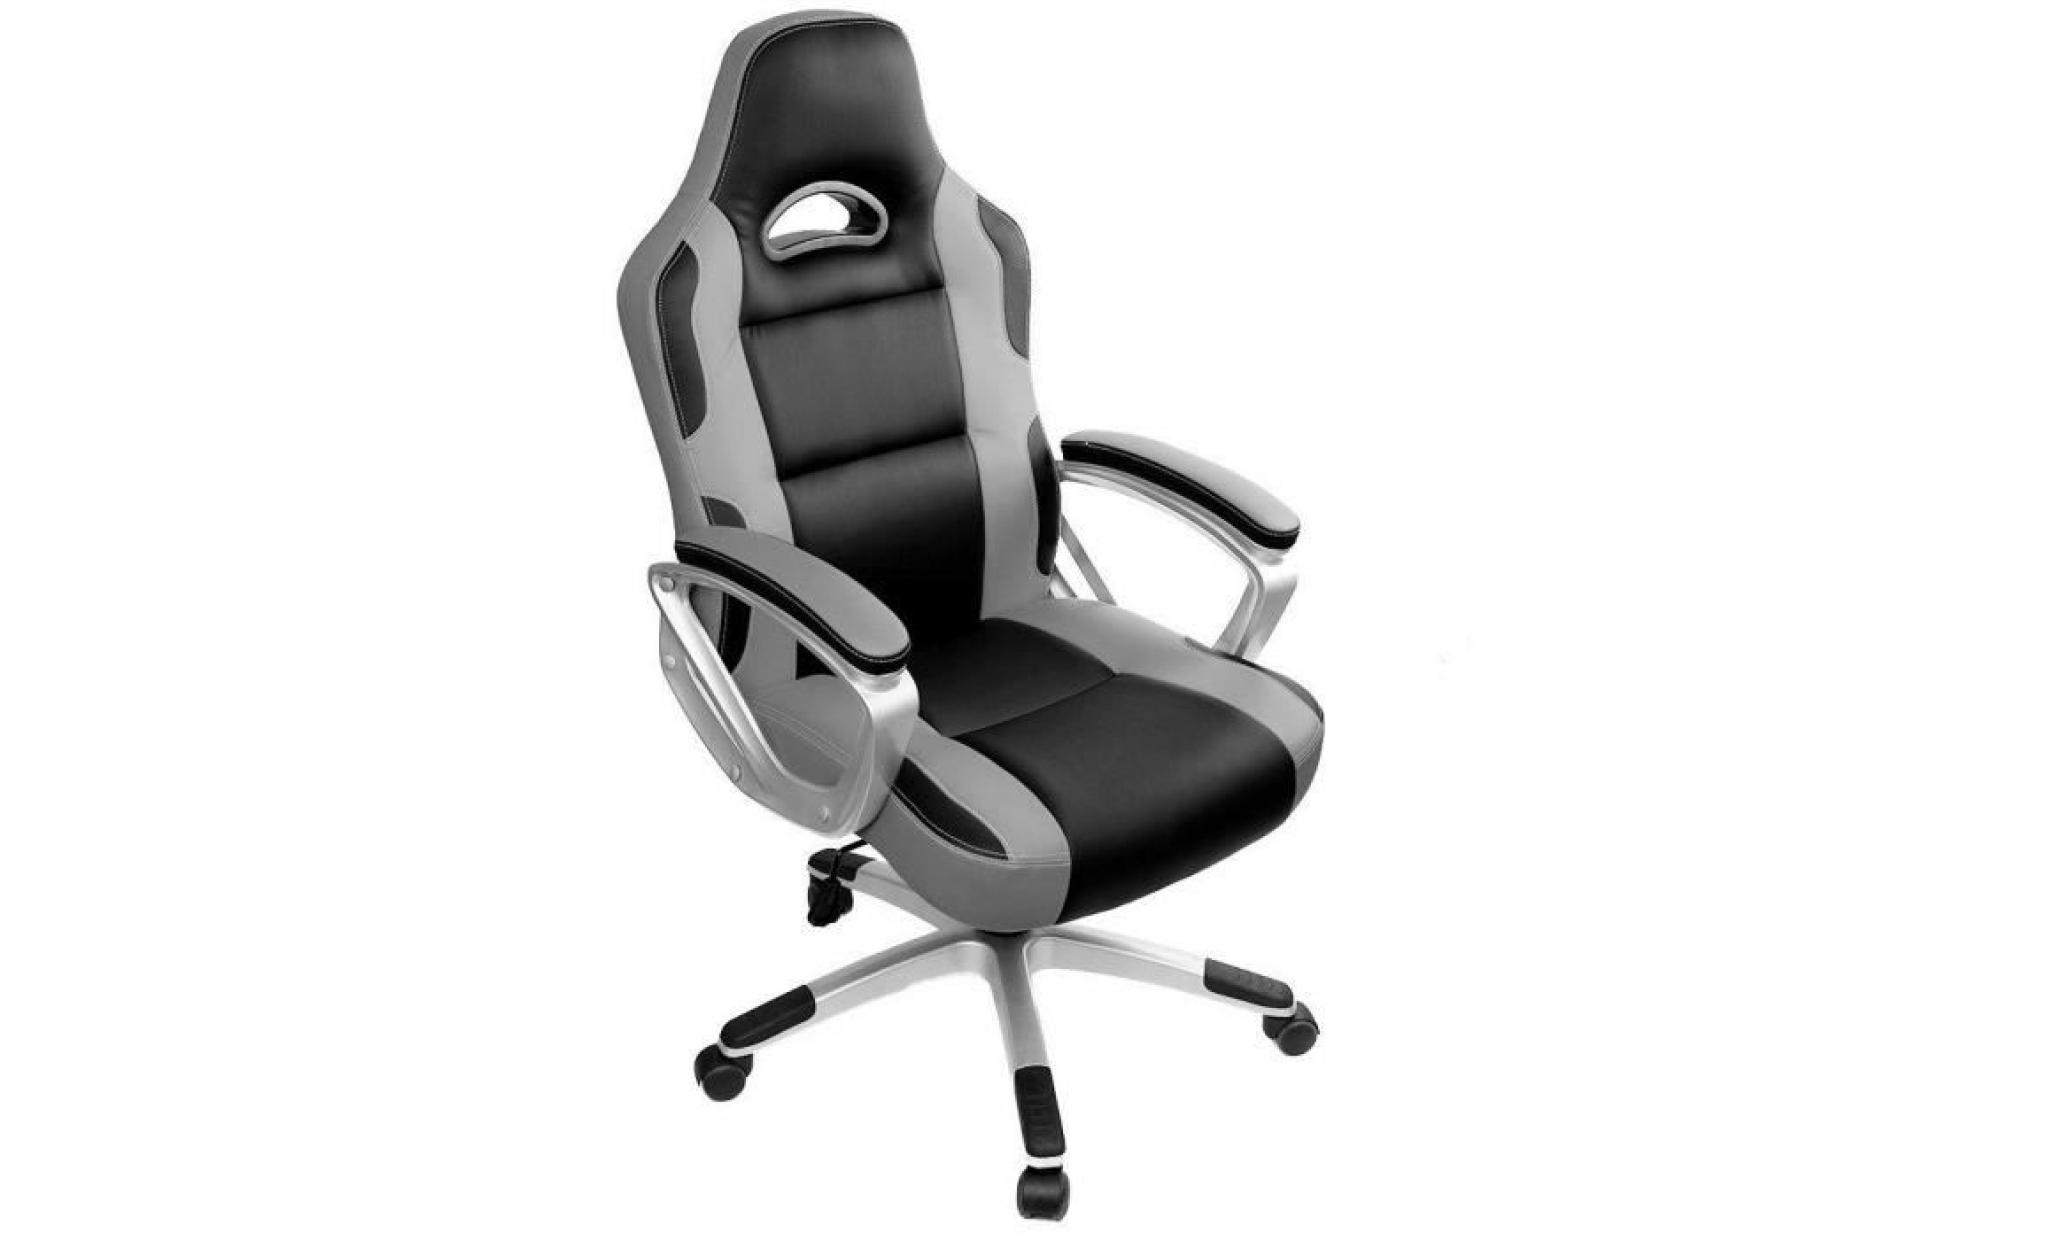 chaise gamer   racing chaise de bureau pu   gaming chaise   fauteuil de  bureau   hauteur réglable   vert / noir   intimate wm heat